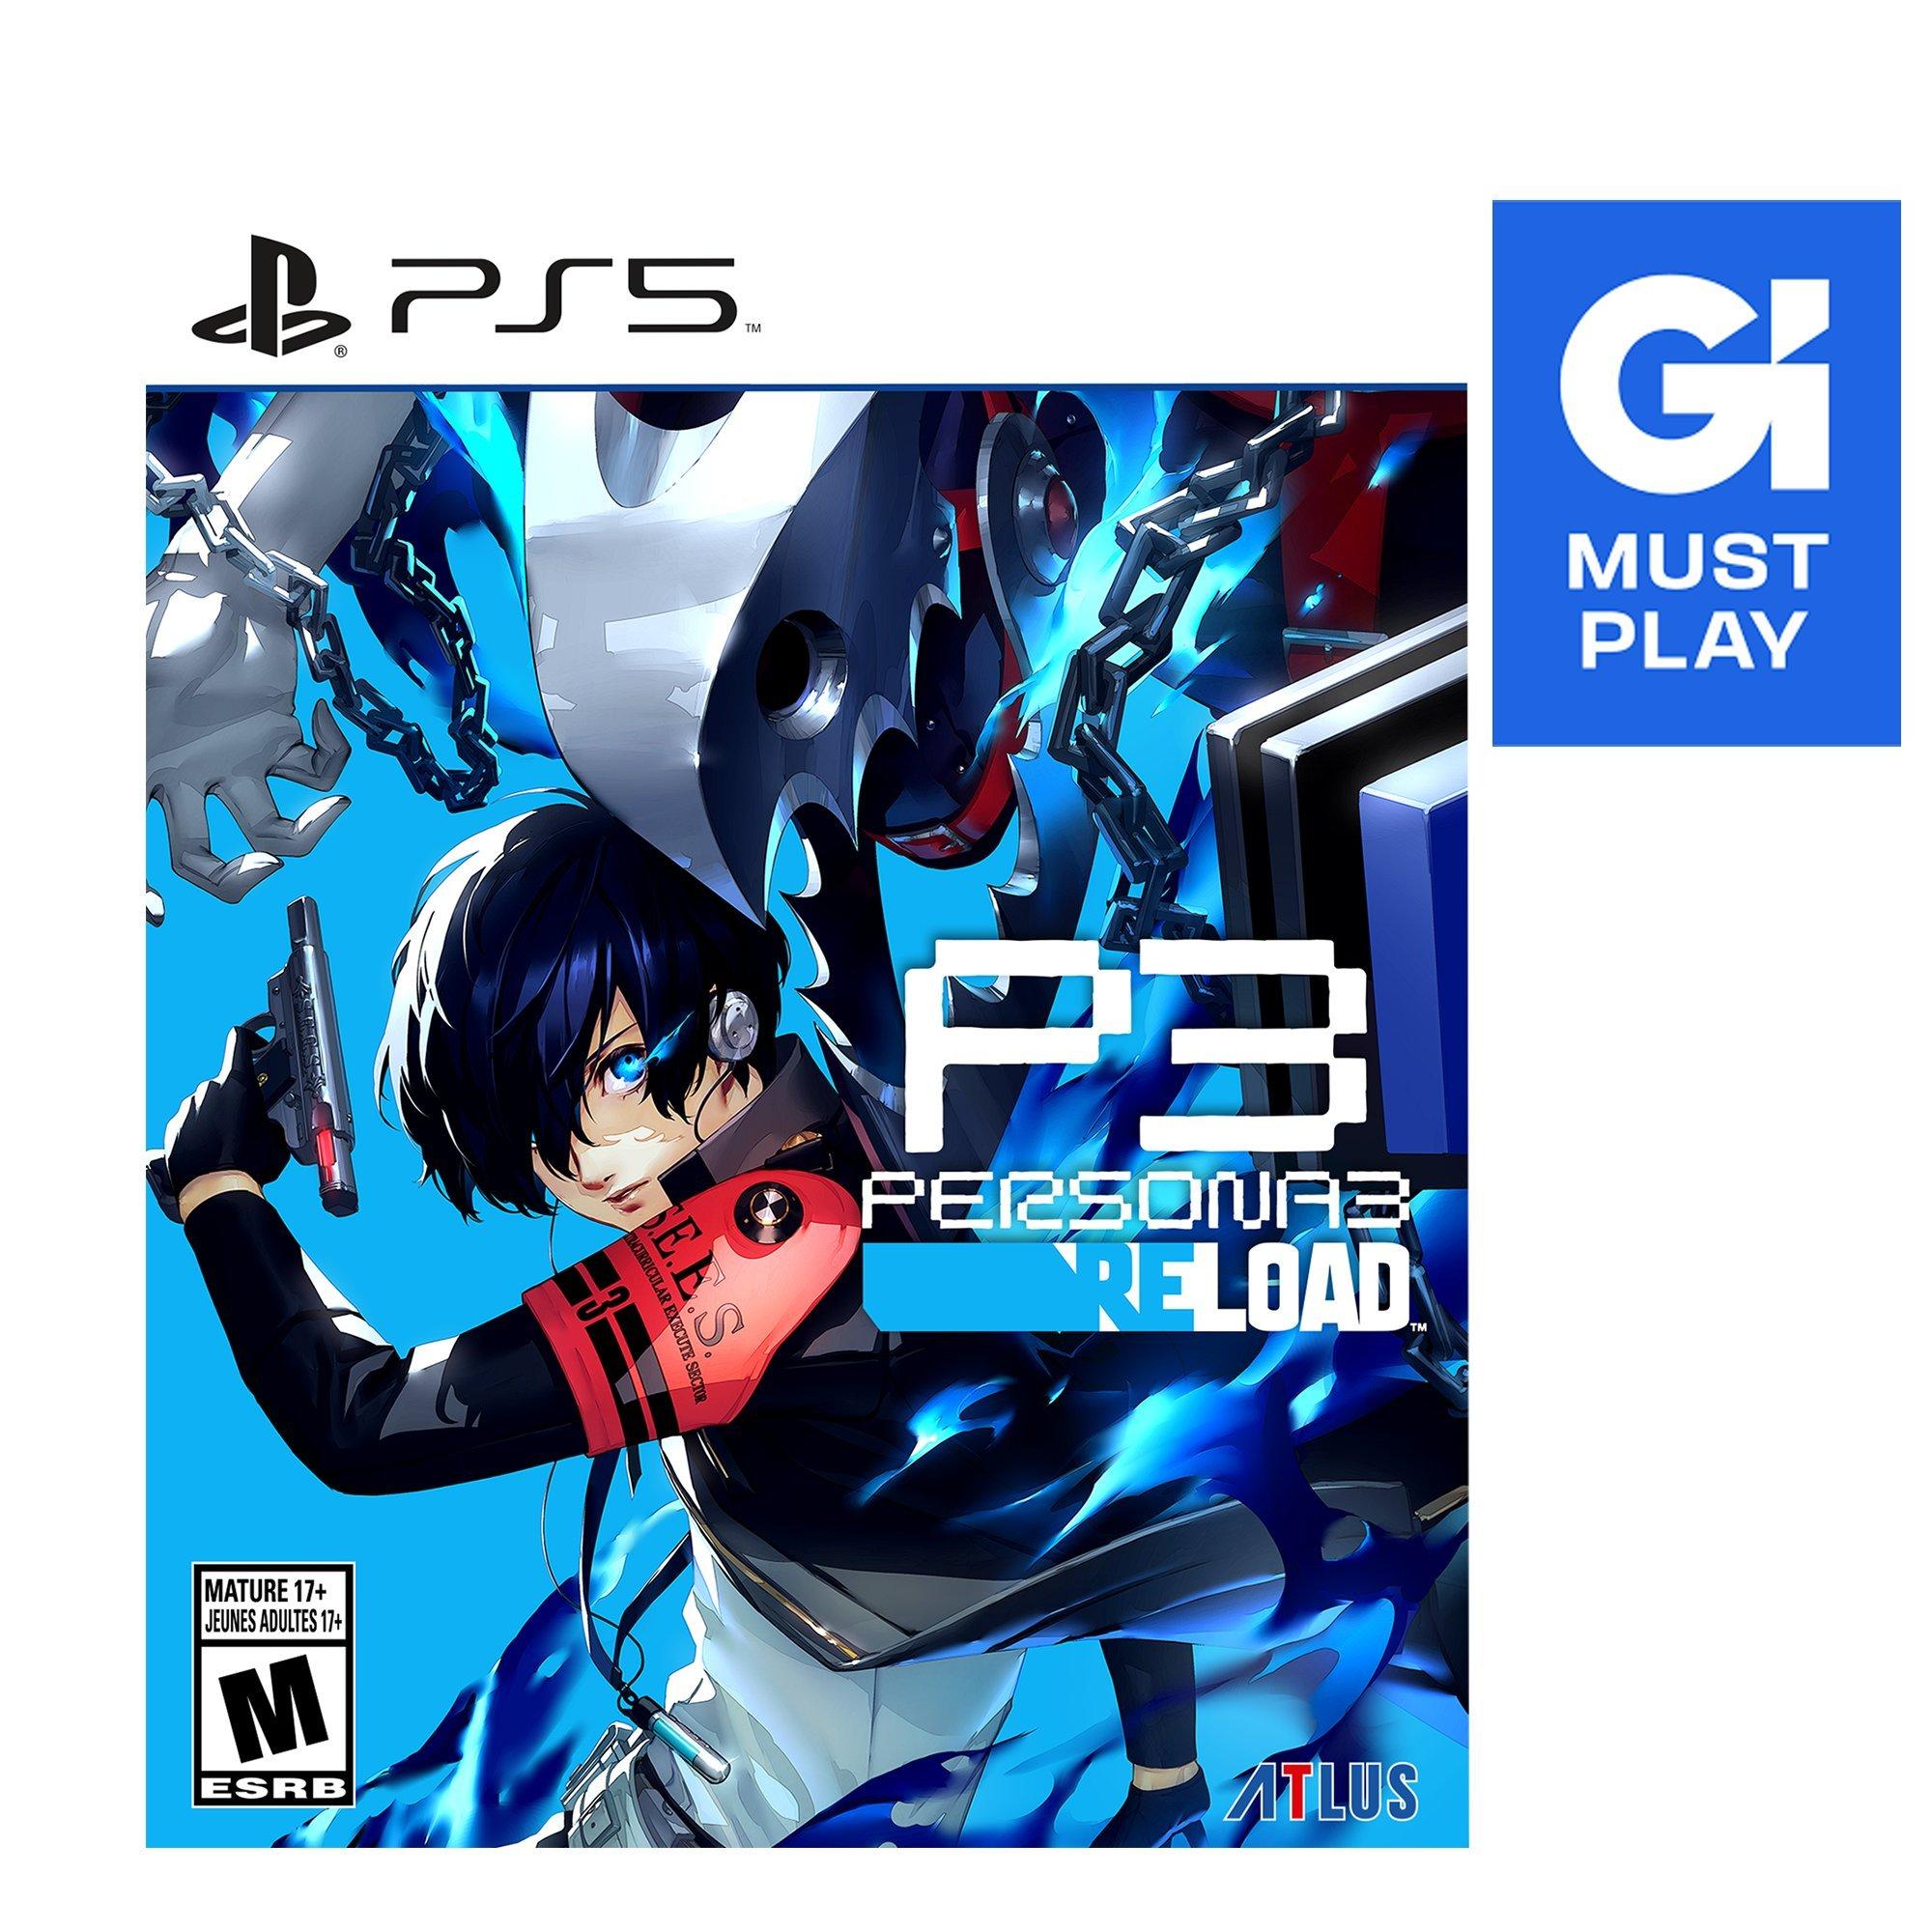 Persona 3 Reload Digital Premium Edition - PC [Steam Online Game Code] 